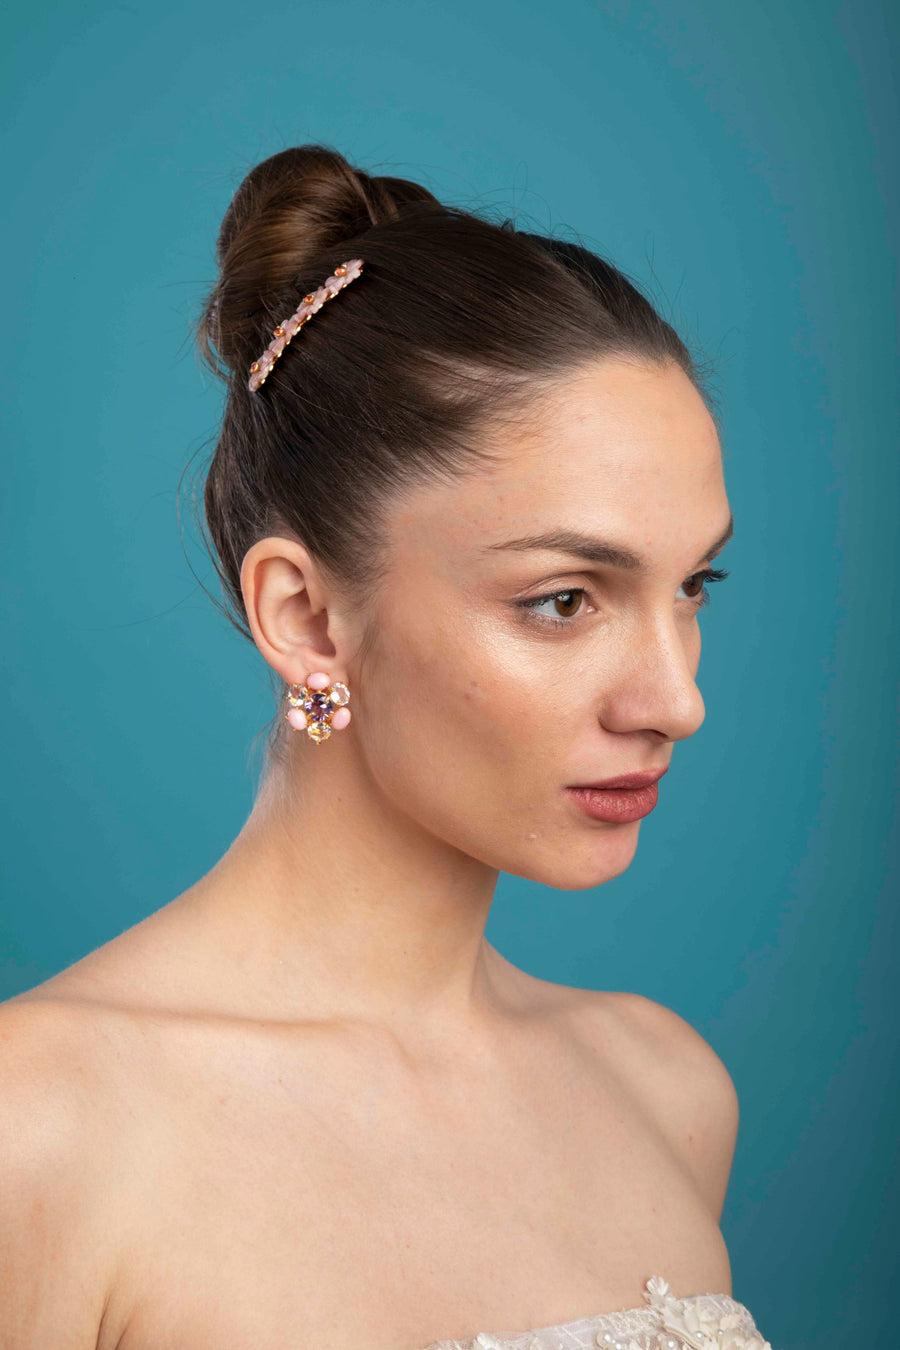 Pink Opal, Amethyst & Pearl Earrings